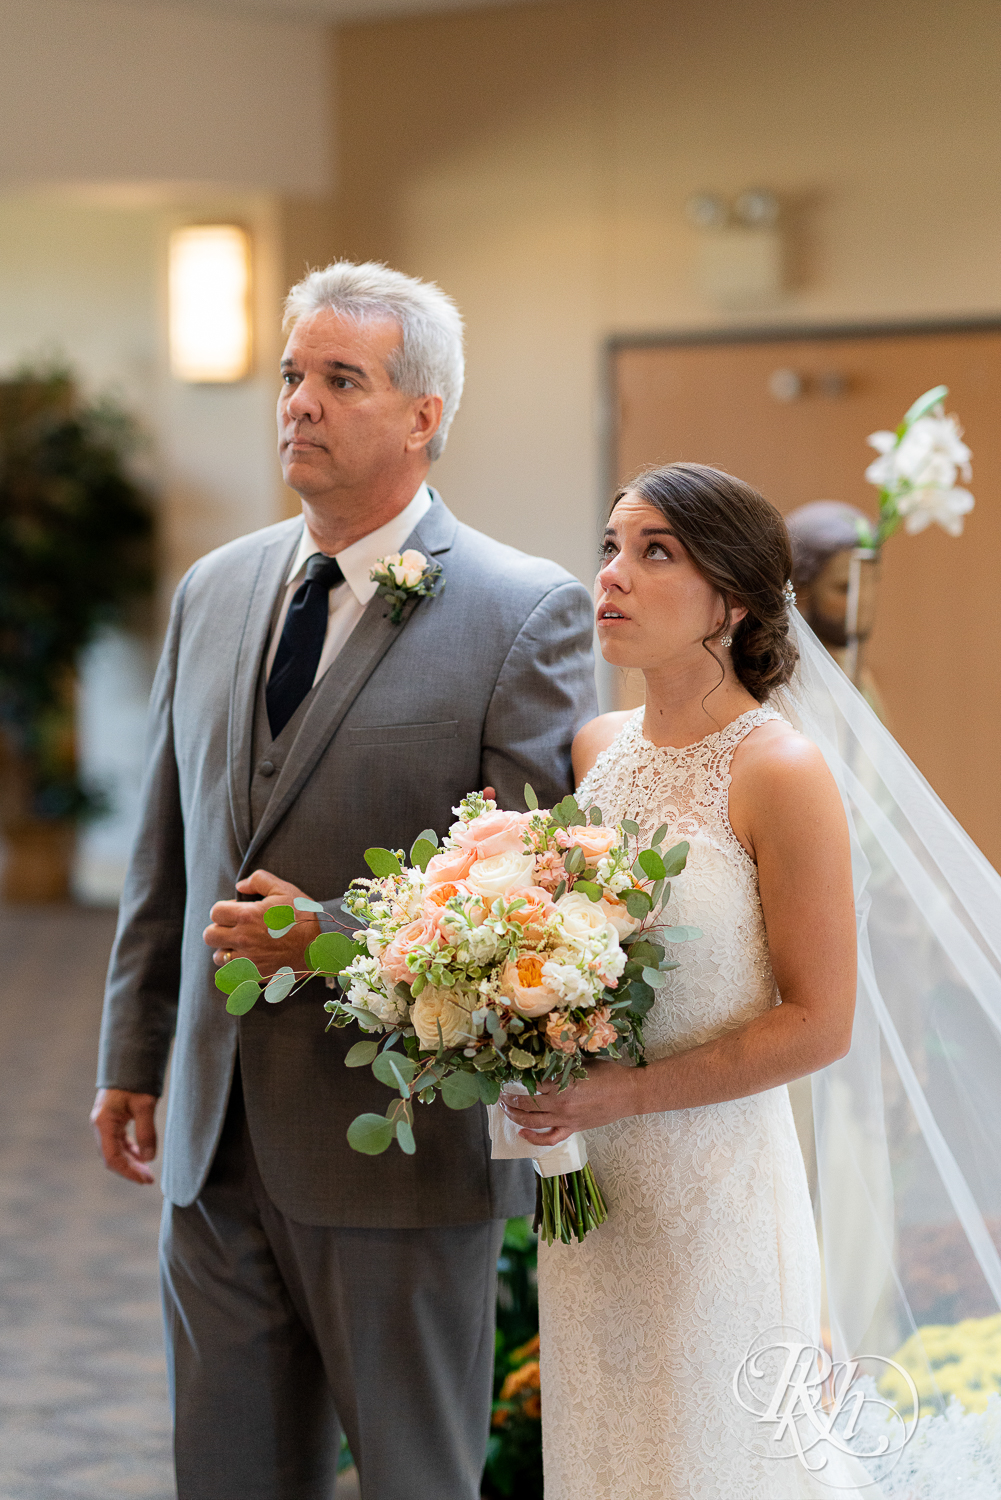 Bride walking down the aisle with father at Saint Joseph Catholic Church in Rosemount, Minnesota.